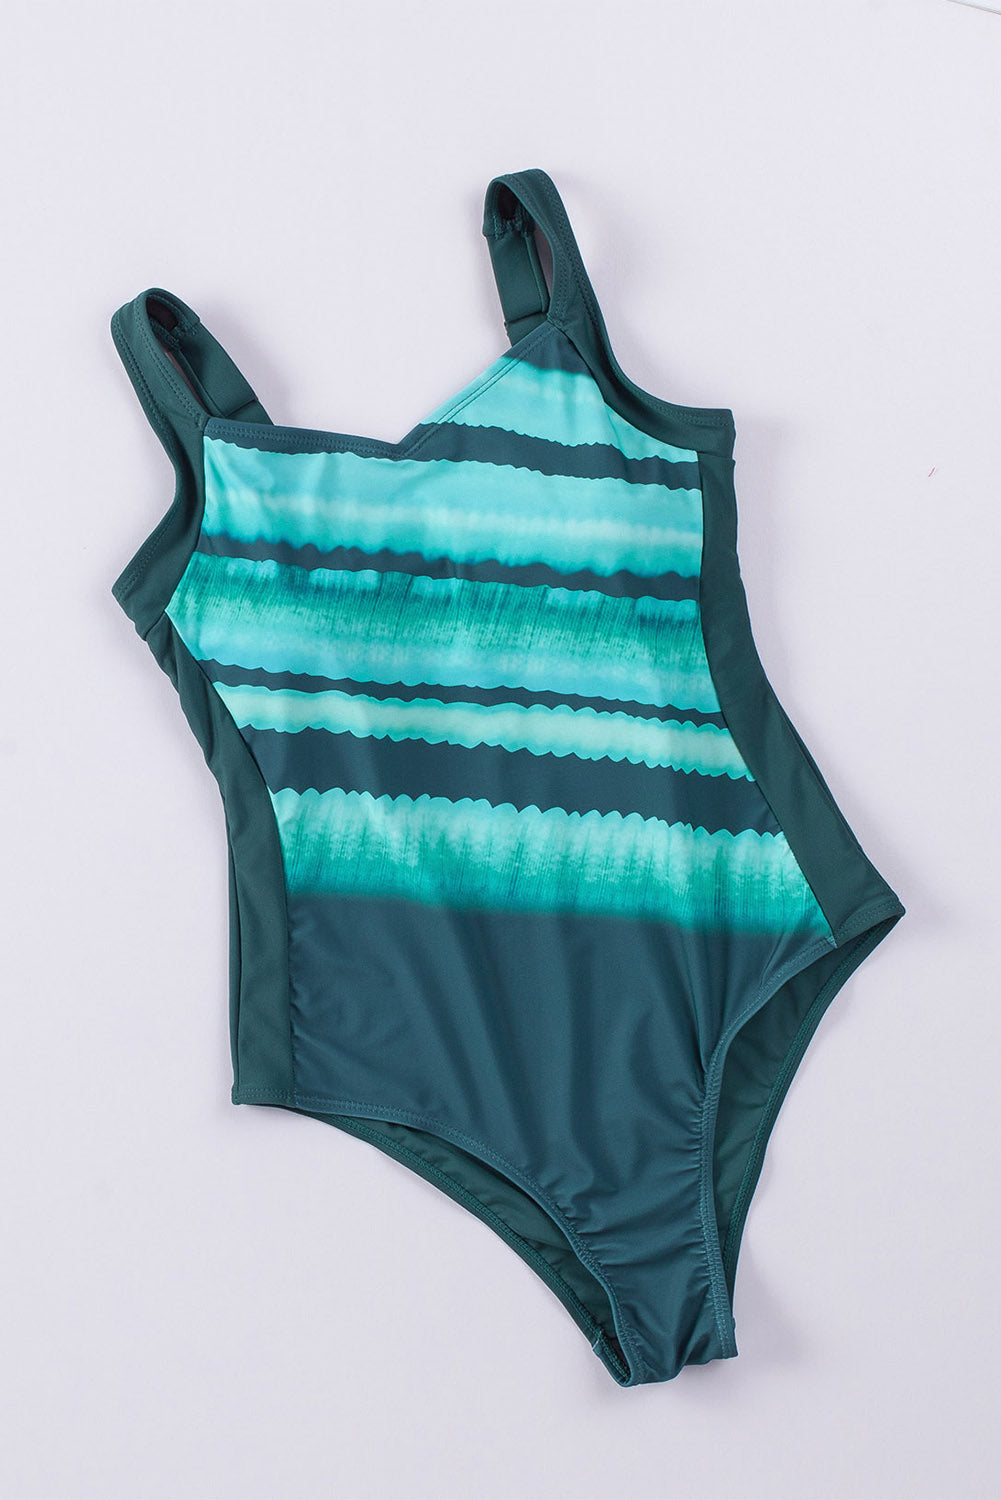 LC442787-104-S, LC442787-104-M, LC442787-104-L, LC442787-104-XL, LC442787-104-2XL, Sky Blue Women's One Piece Swimsuit Striped Pattern Print Sleeveless Bathing Suit